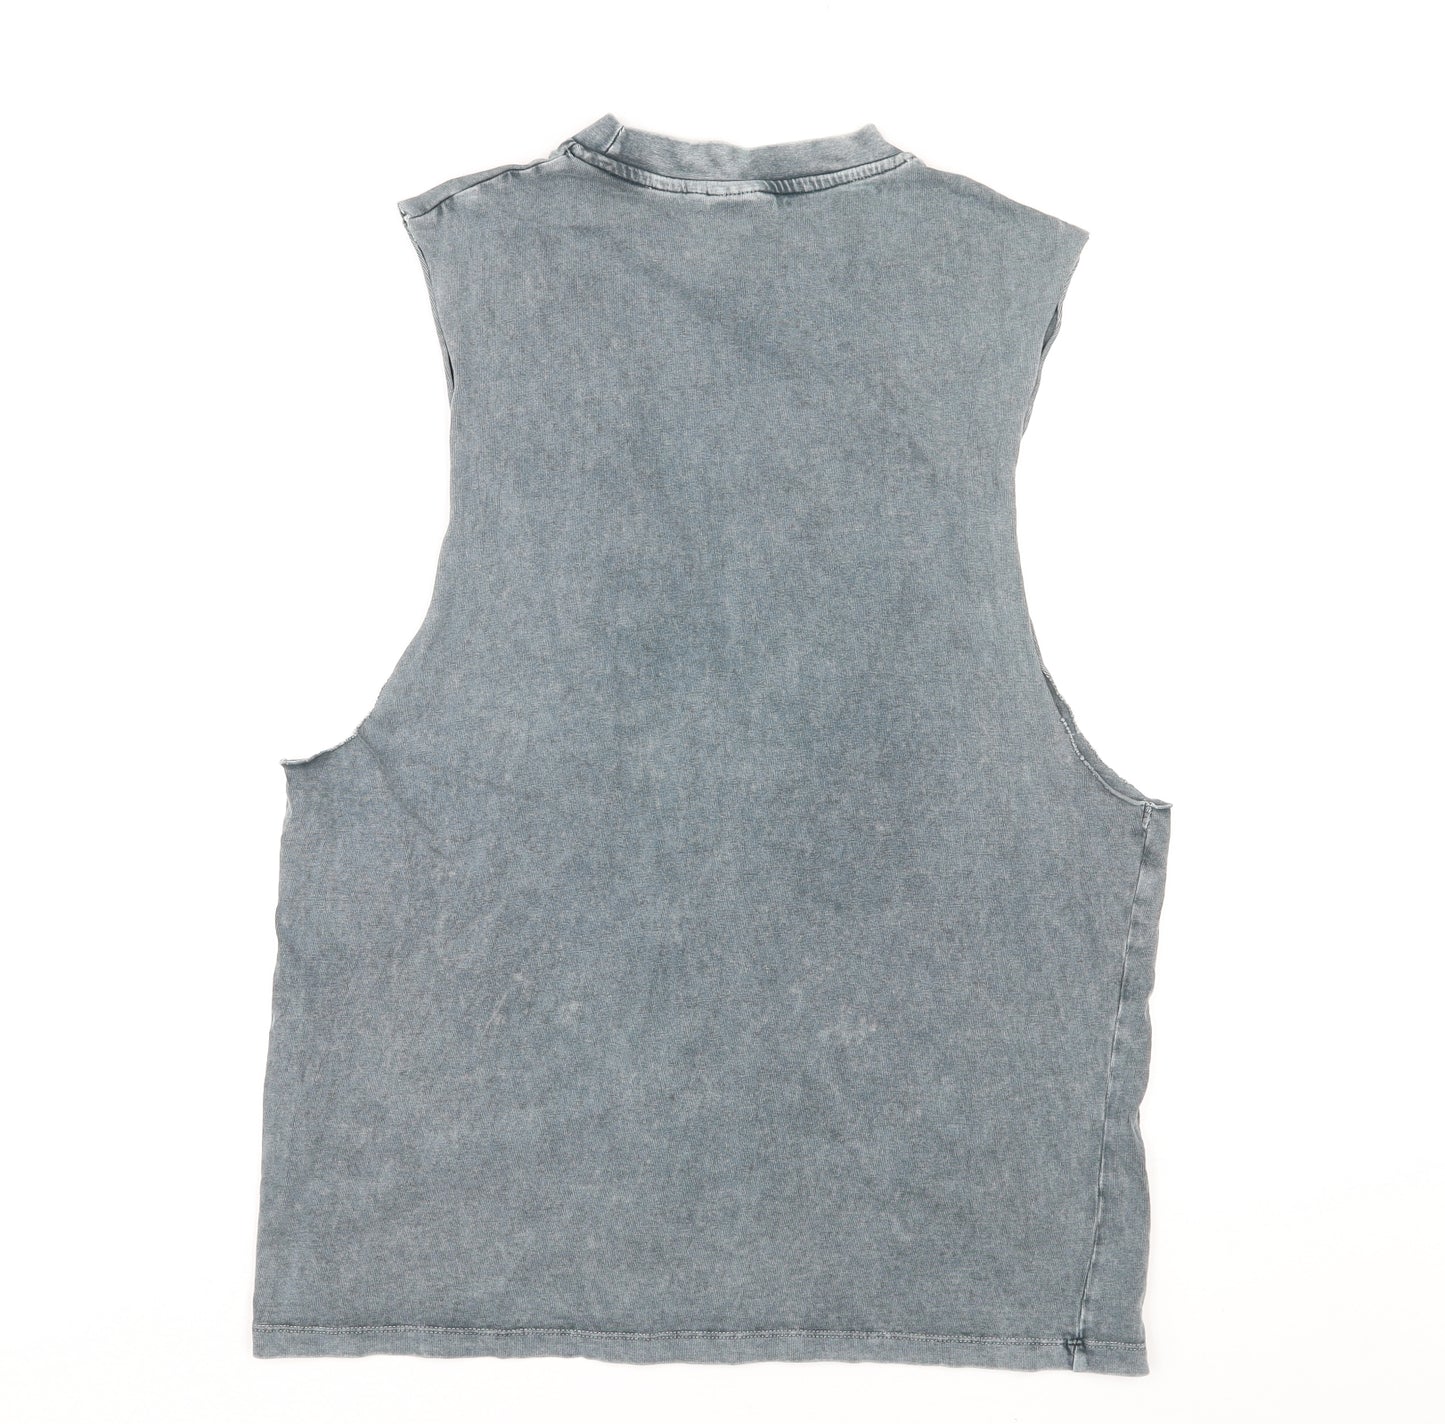 ASOS Mens Grey Cotton T-Shirt Size L Mock Neck - Acid Wash